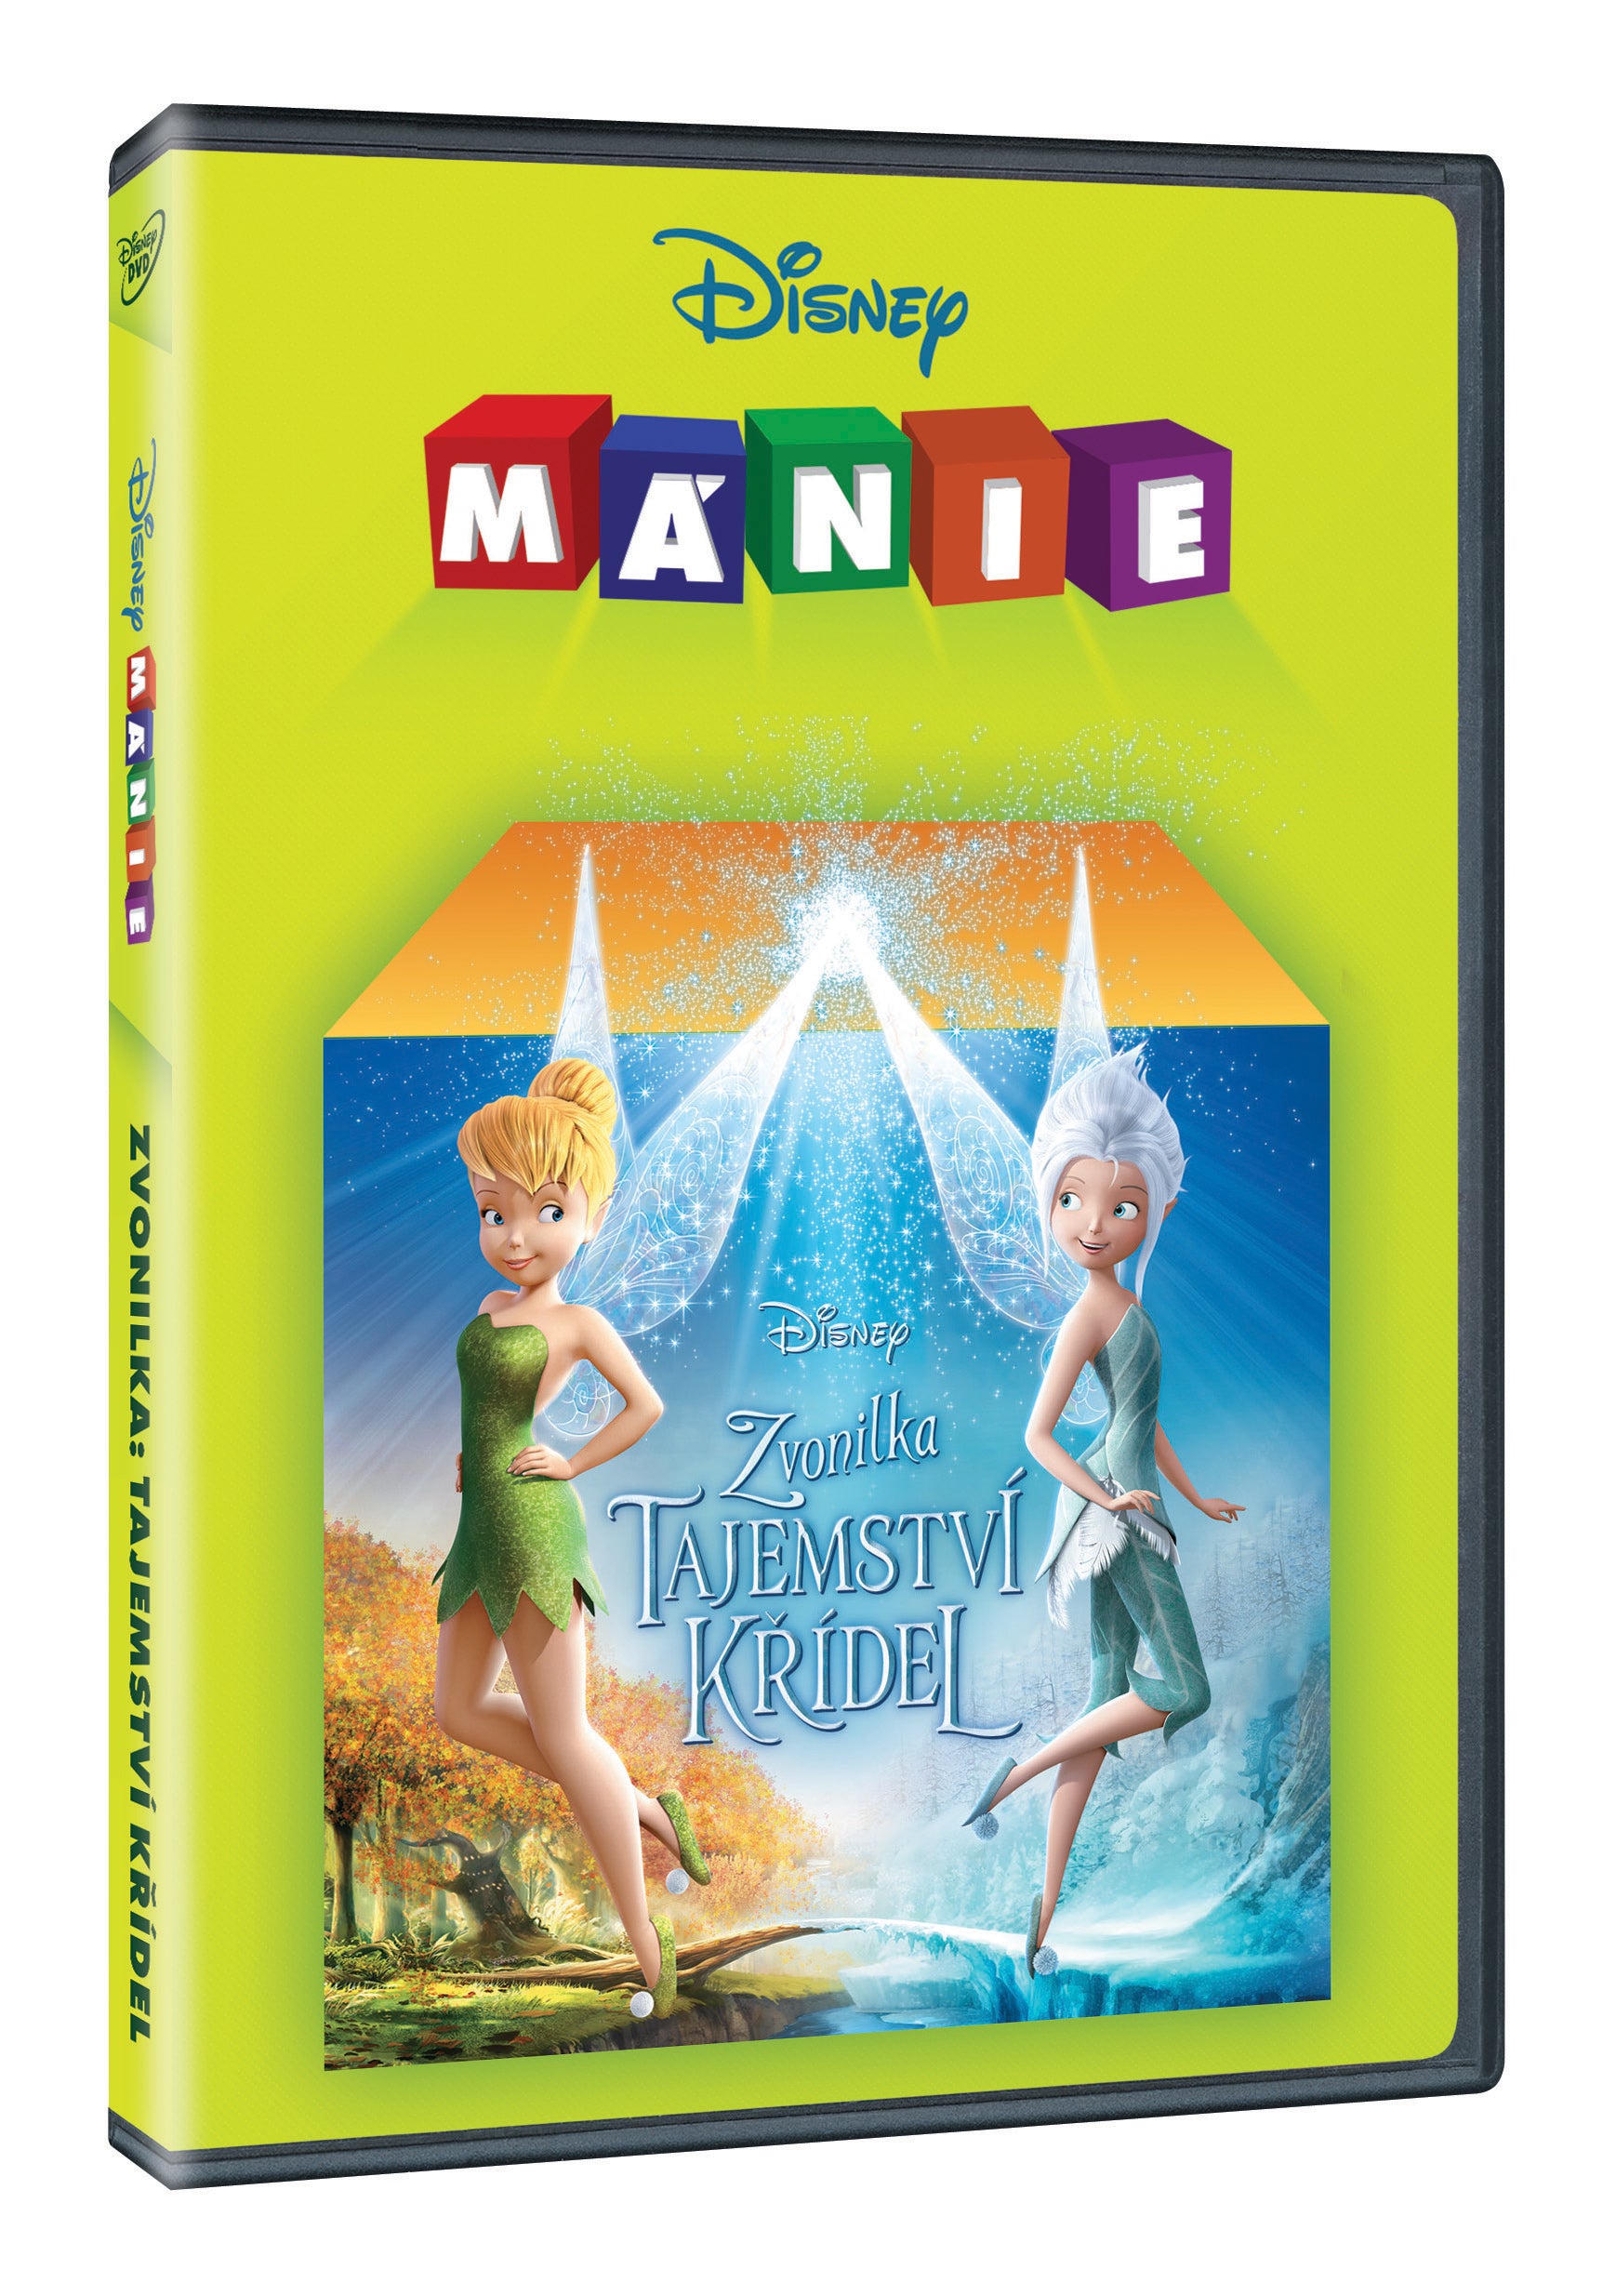 Zvonilka: Tajemstvi kridel DVD - Edice Disney manie / Secret of the Wings